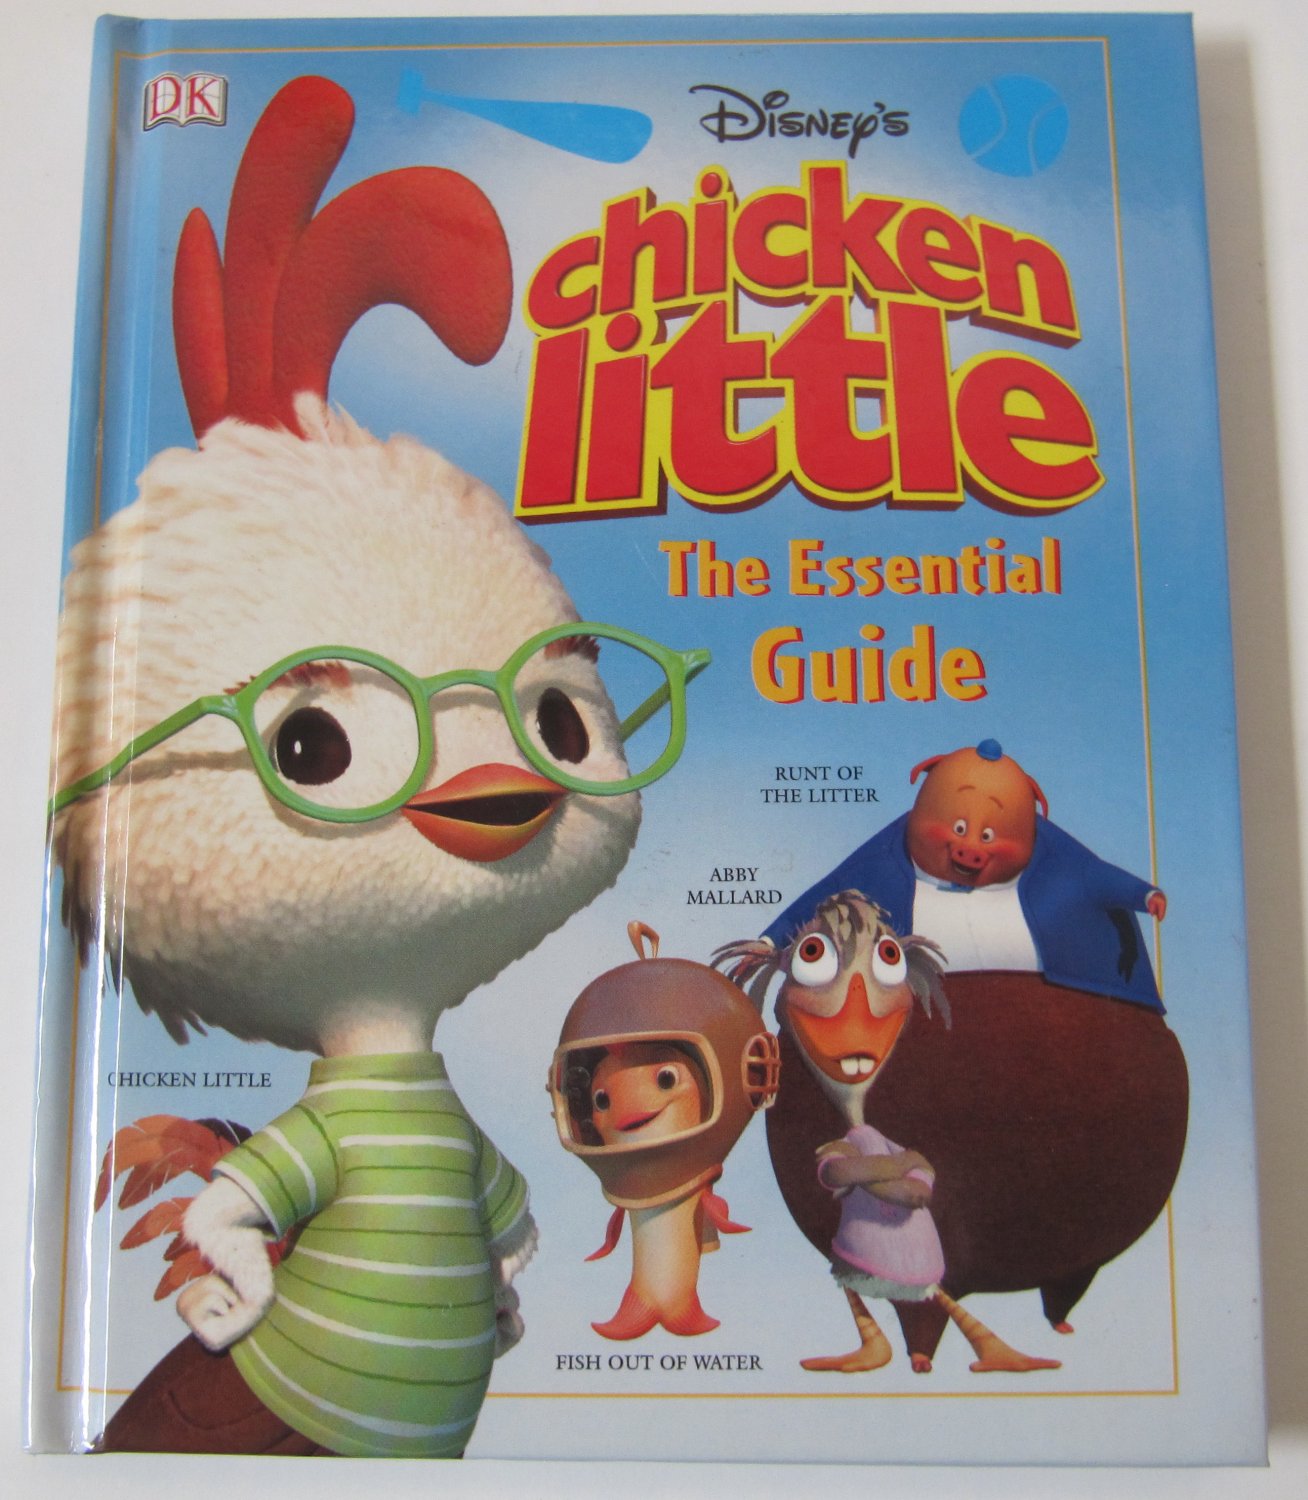 Disney's Chicken Little The Essential Guide Hardcover Children's Book